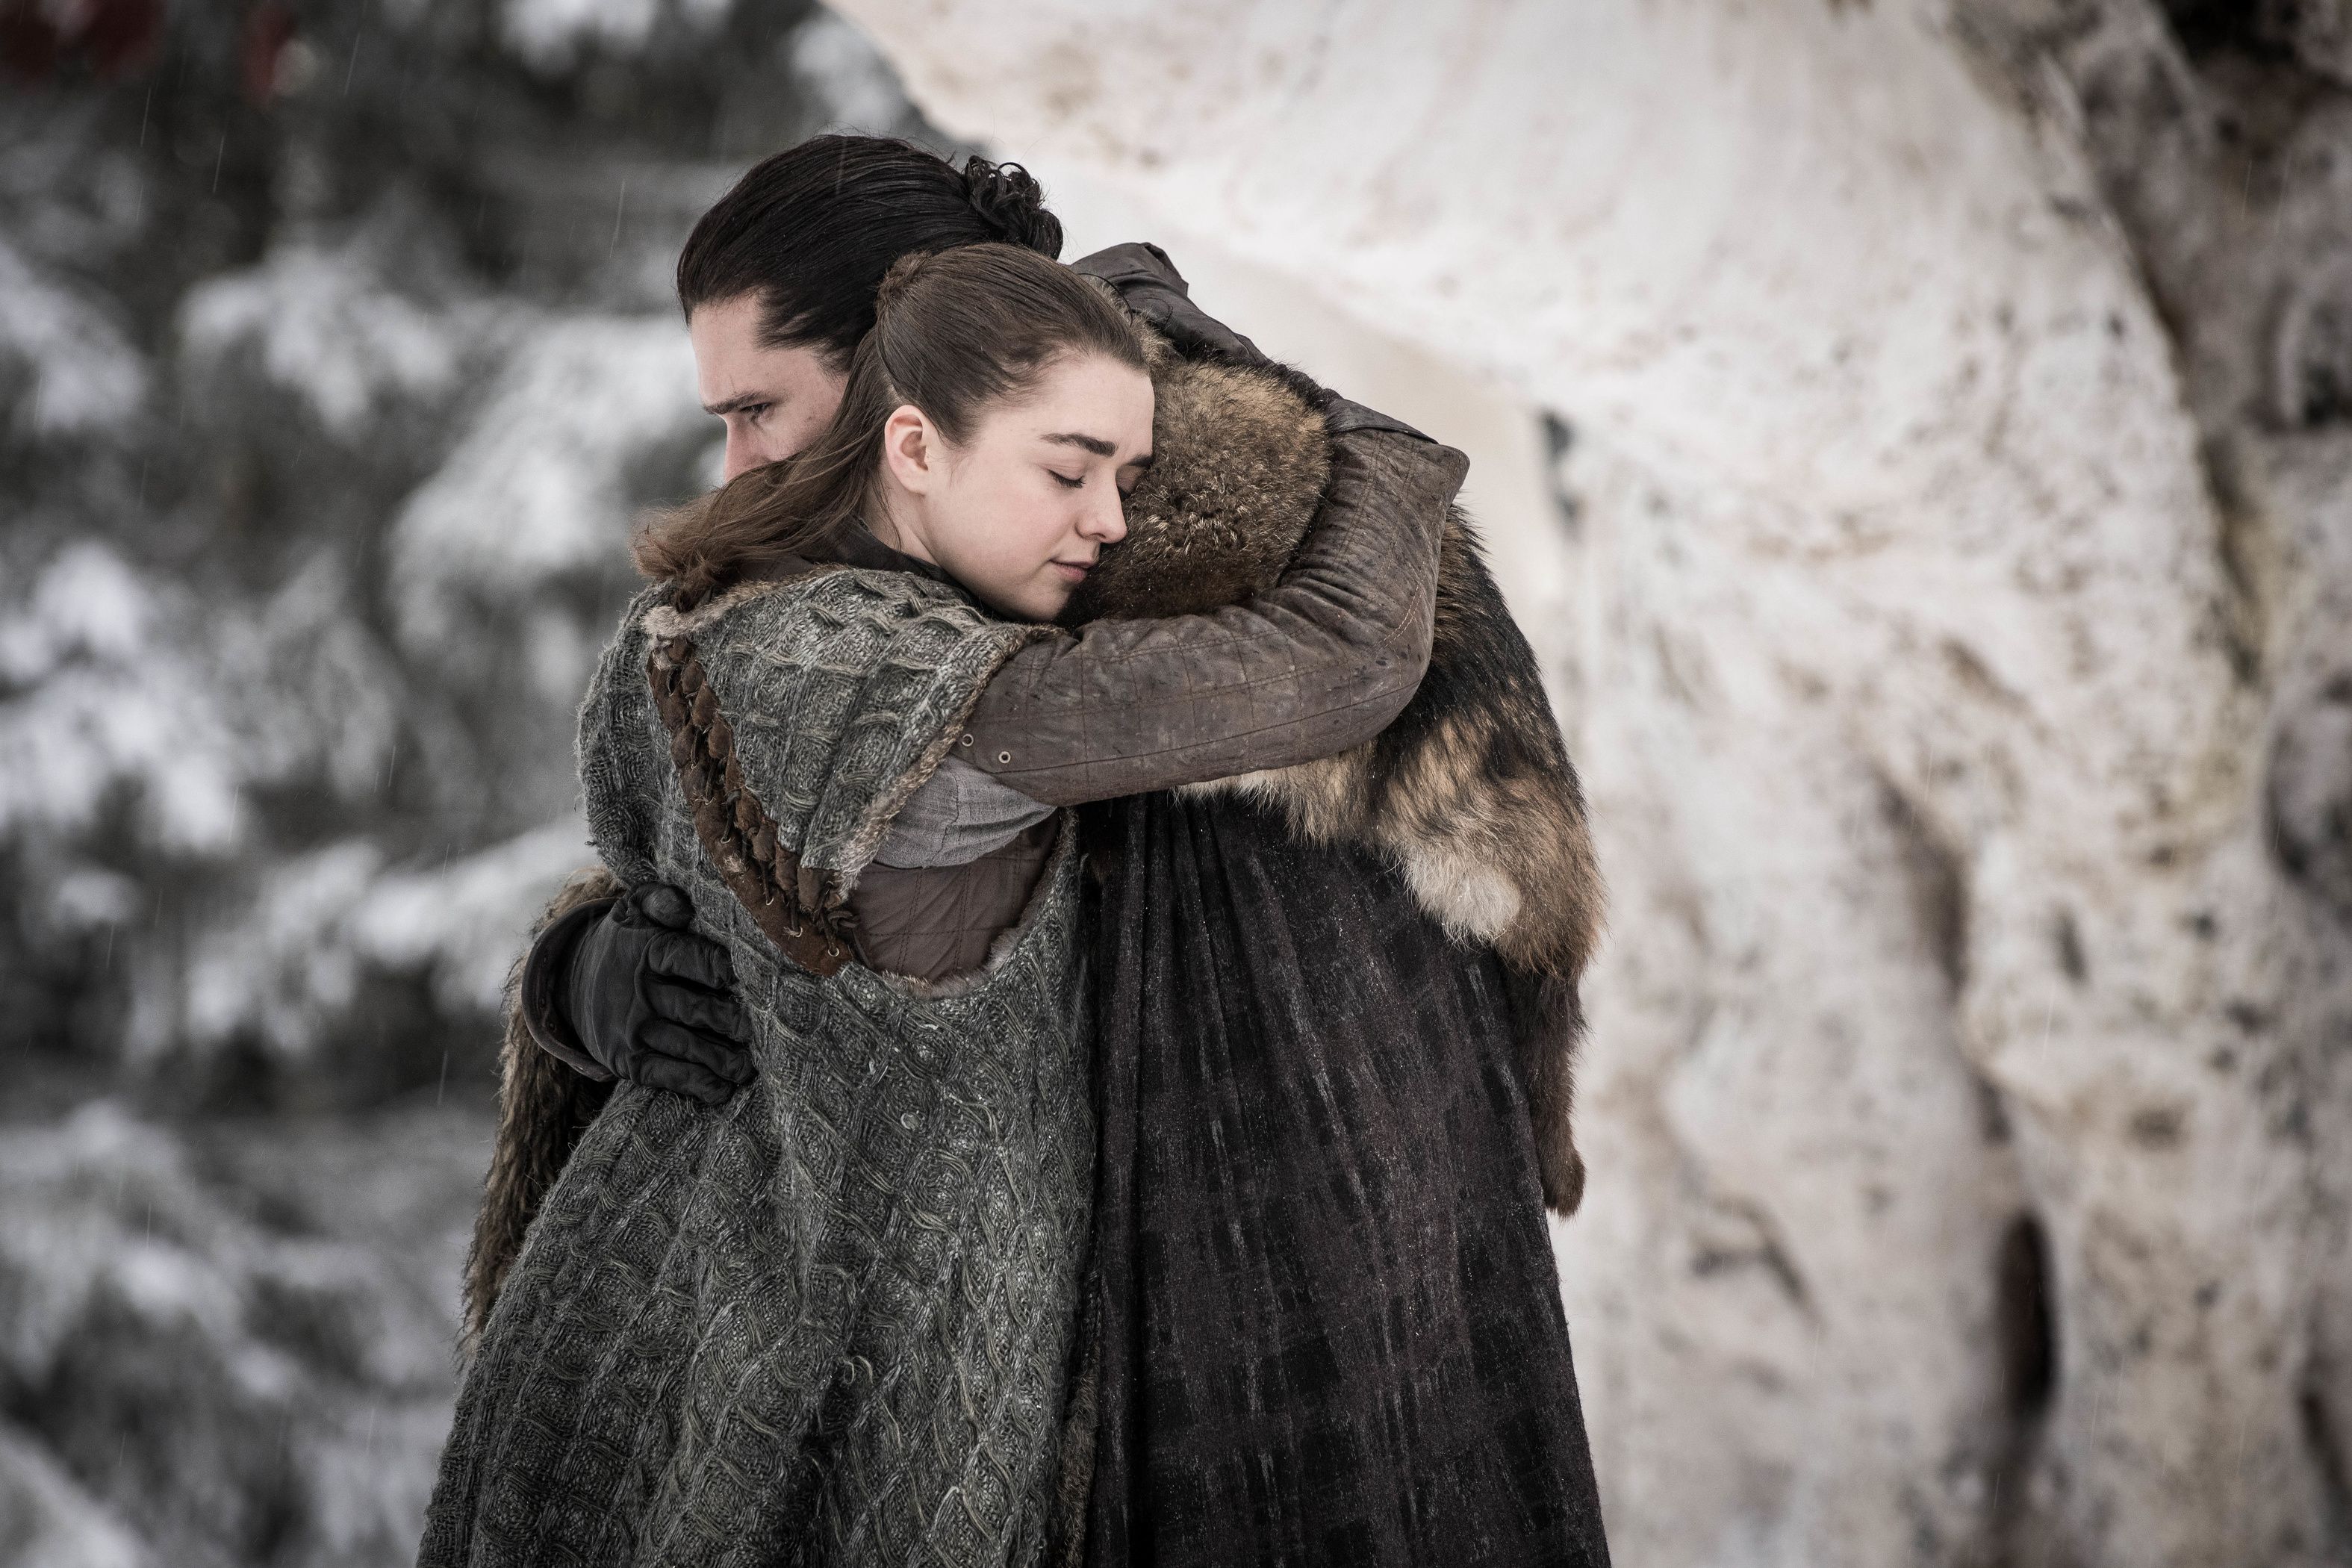 Jon Snow Meets Arya Stark in GOT Season 8 Wallpaper, HD TV Series